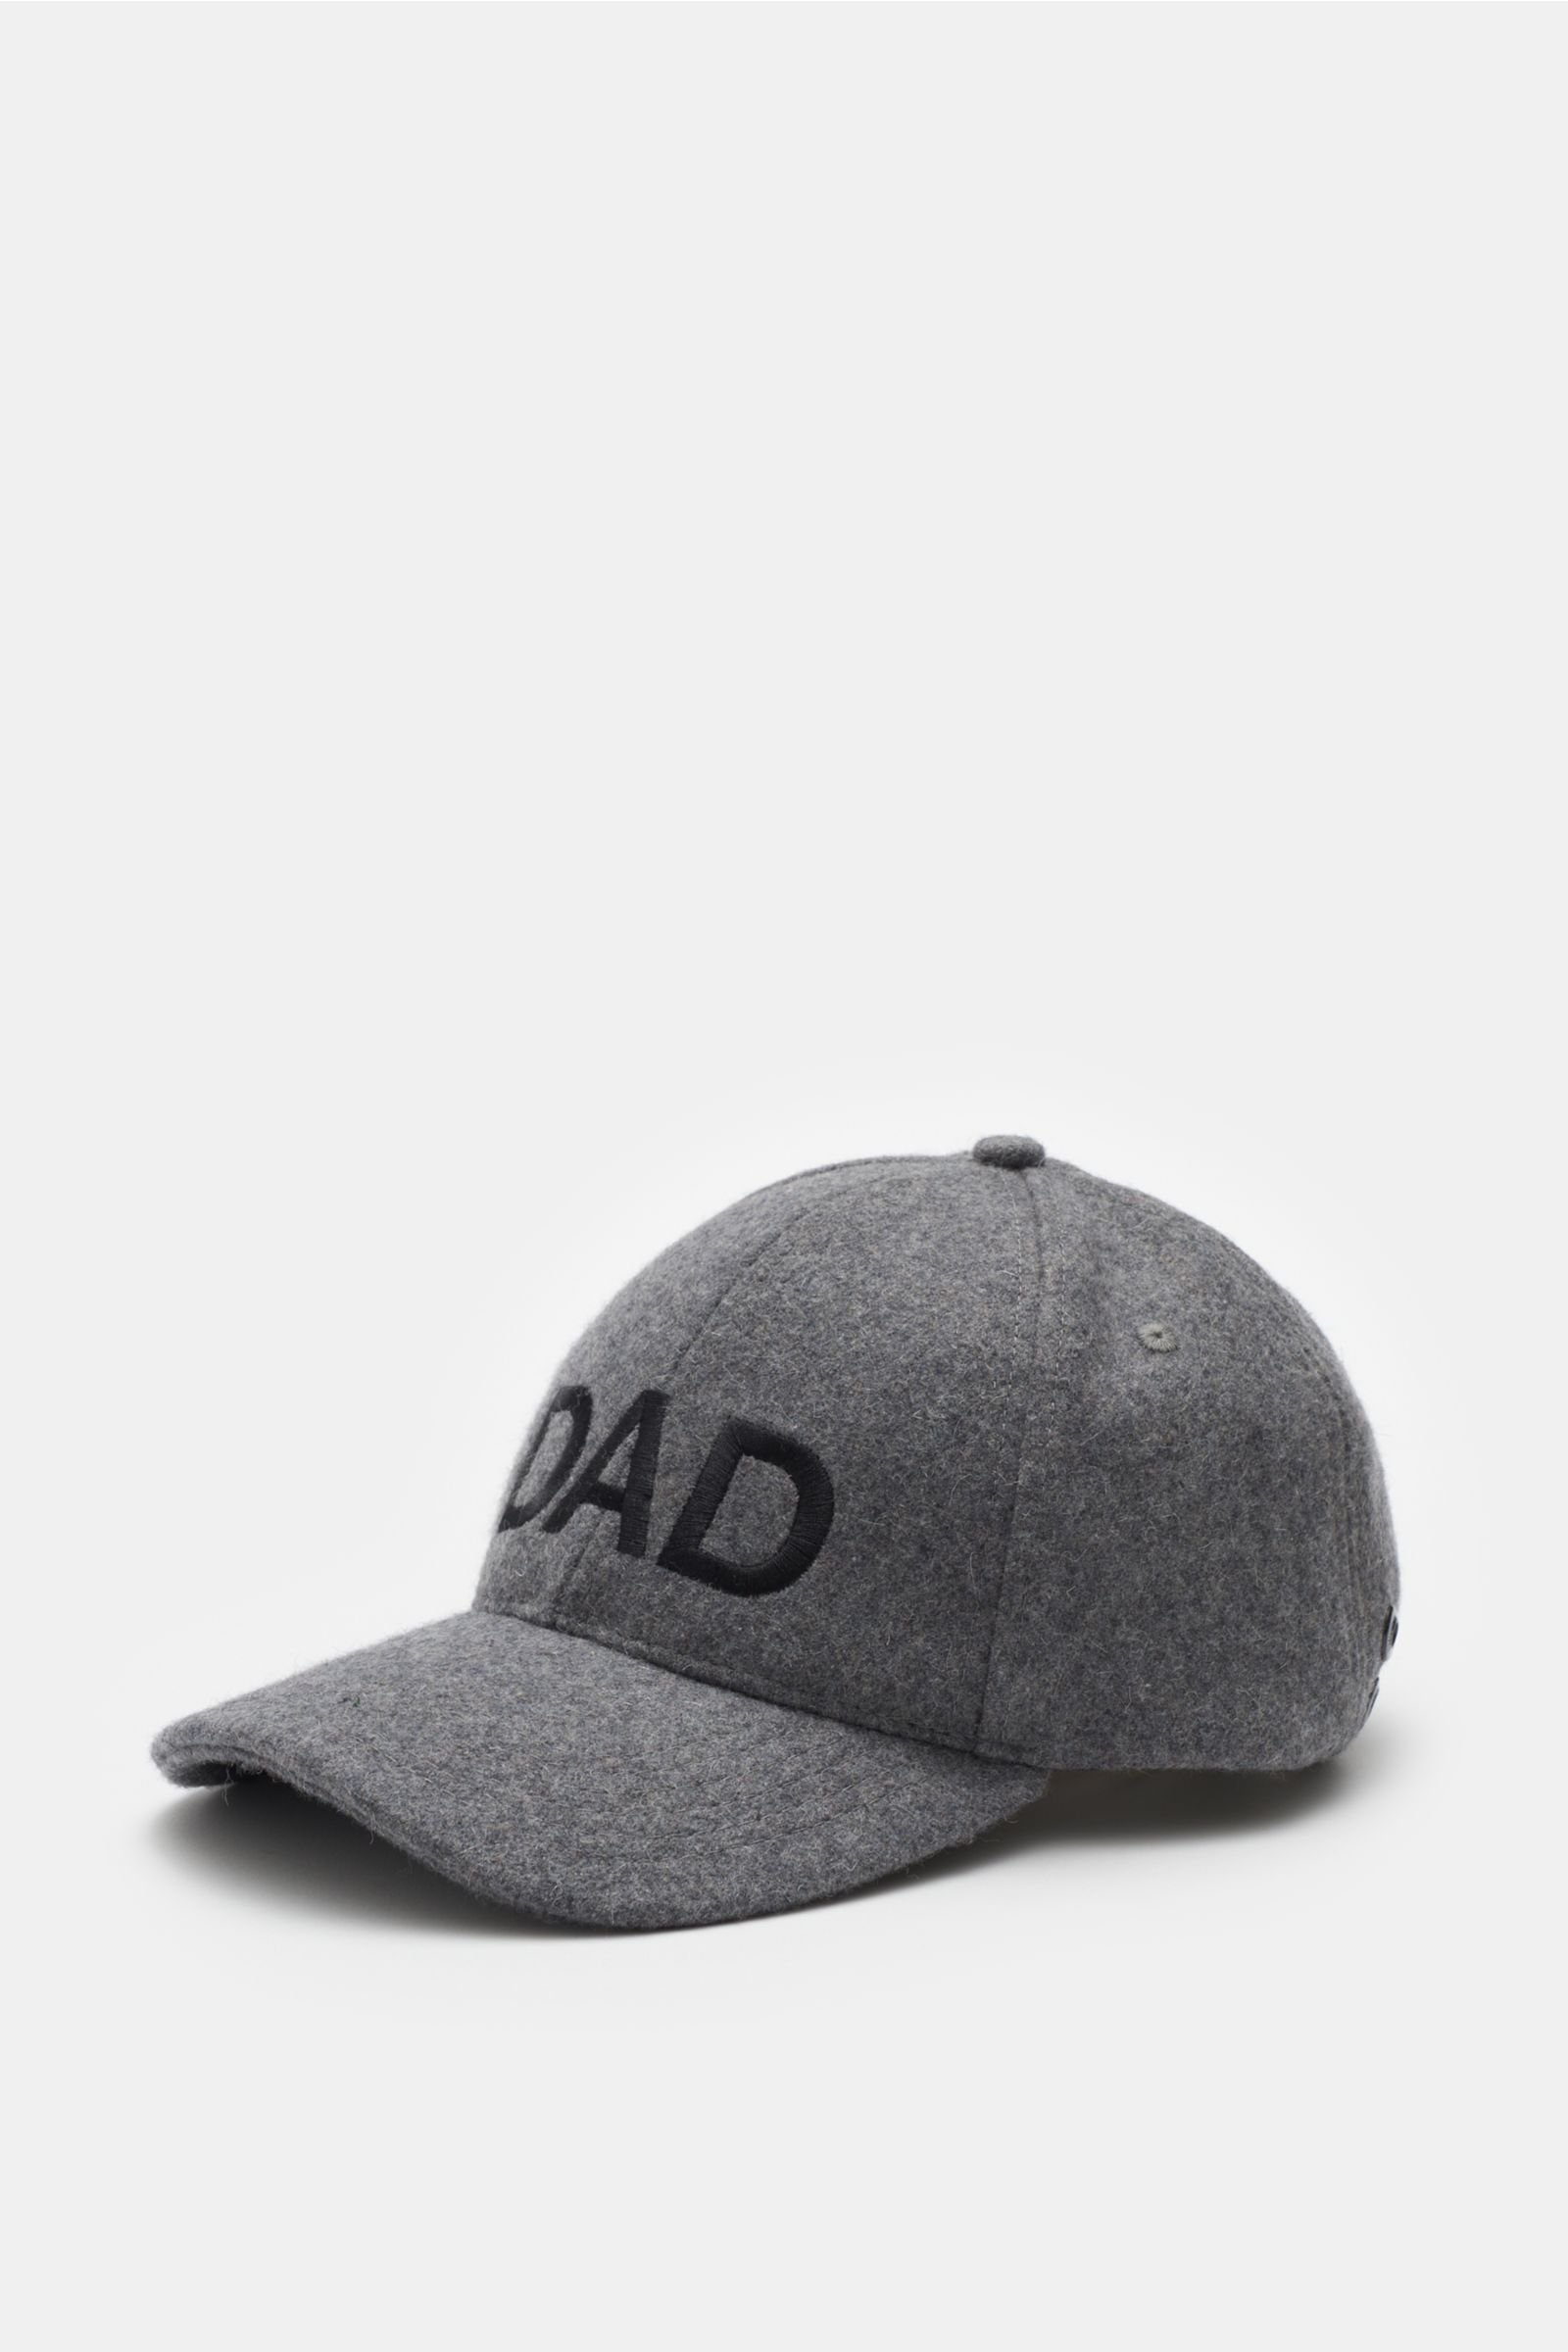 Baseball-Cap 'Dad' grau